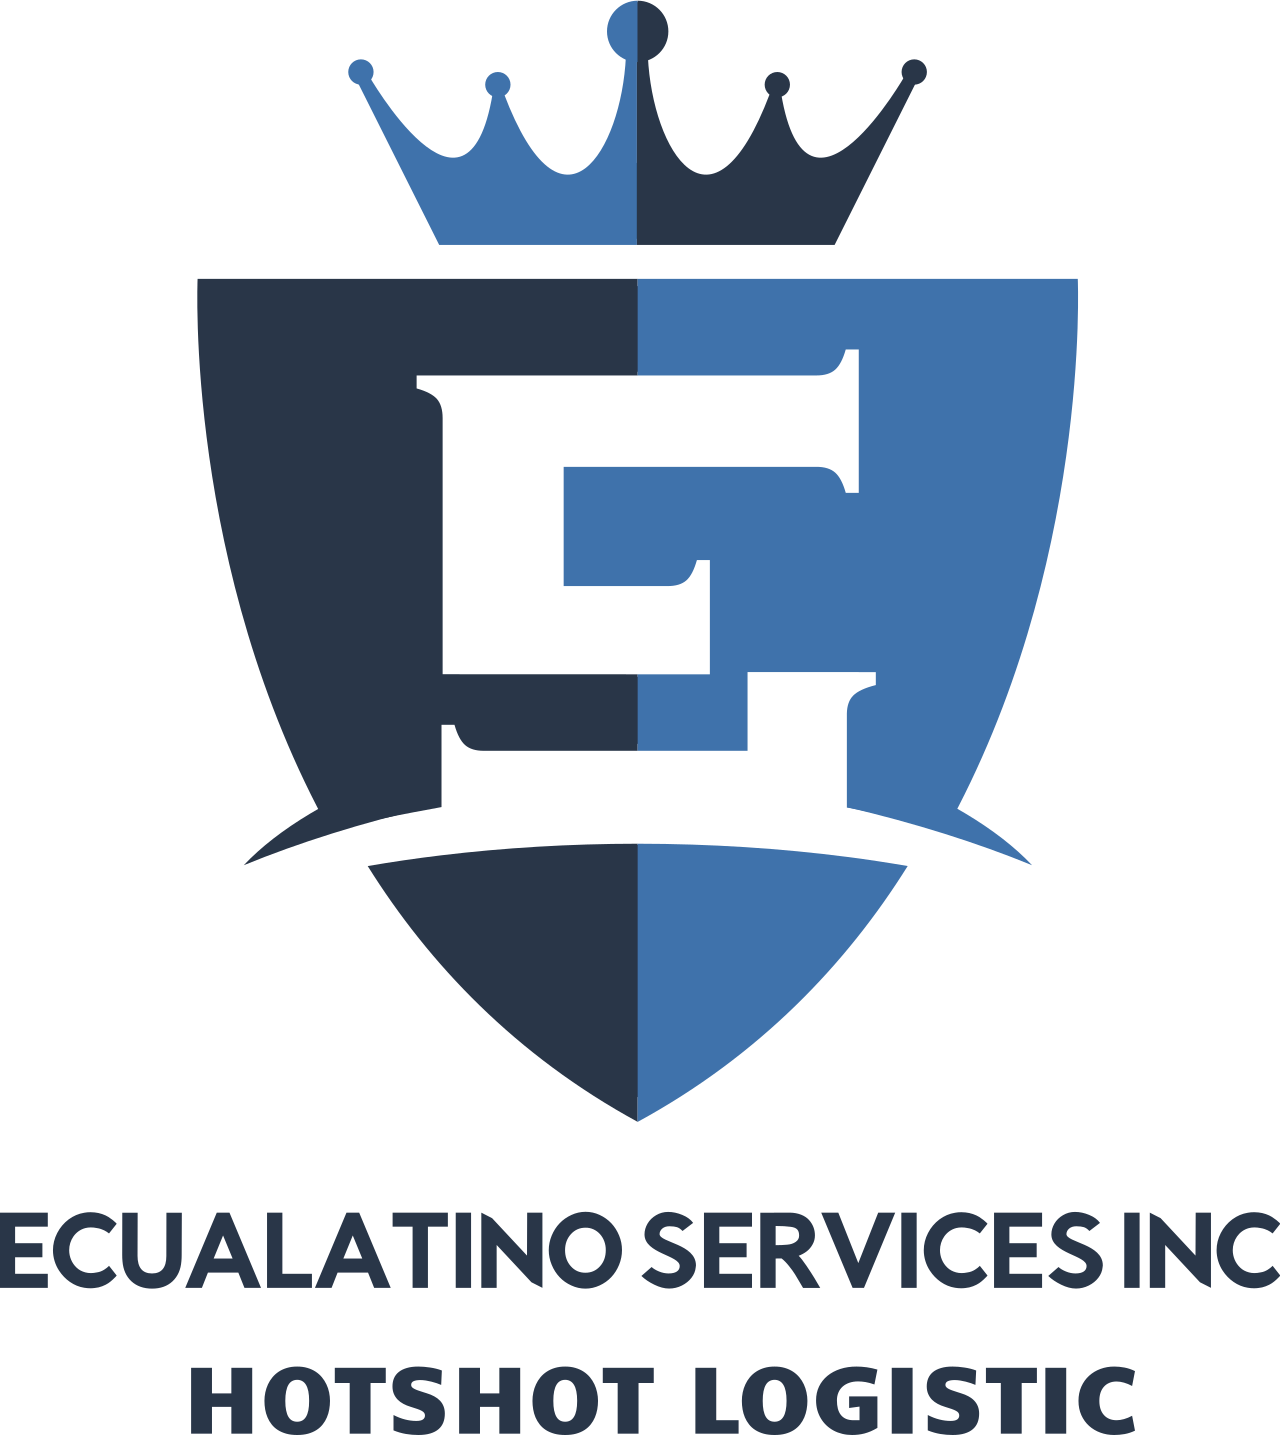 ECUALATINO SERVICES INC's web page